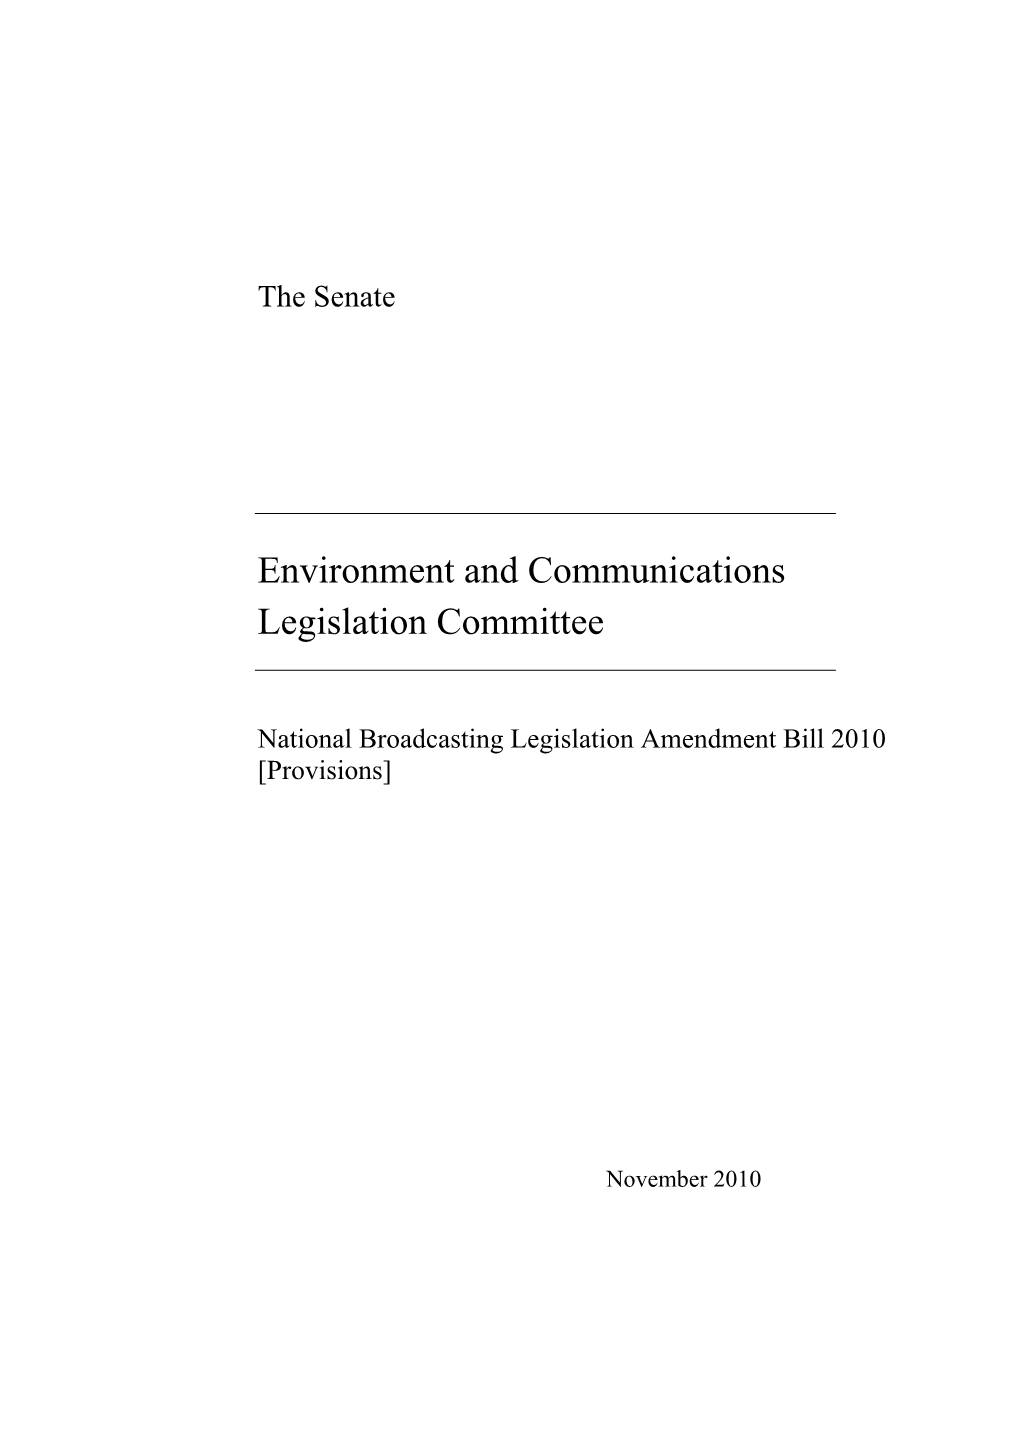 National Broadcasting Legislation Amendment Bill 2010 [Provisions]